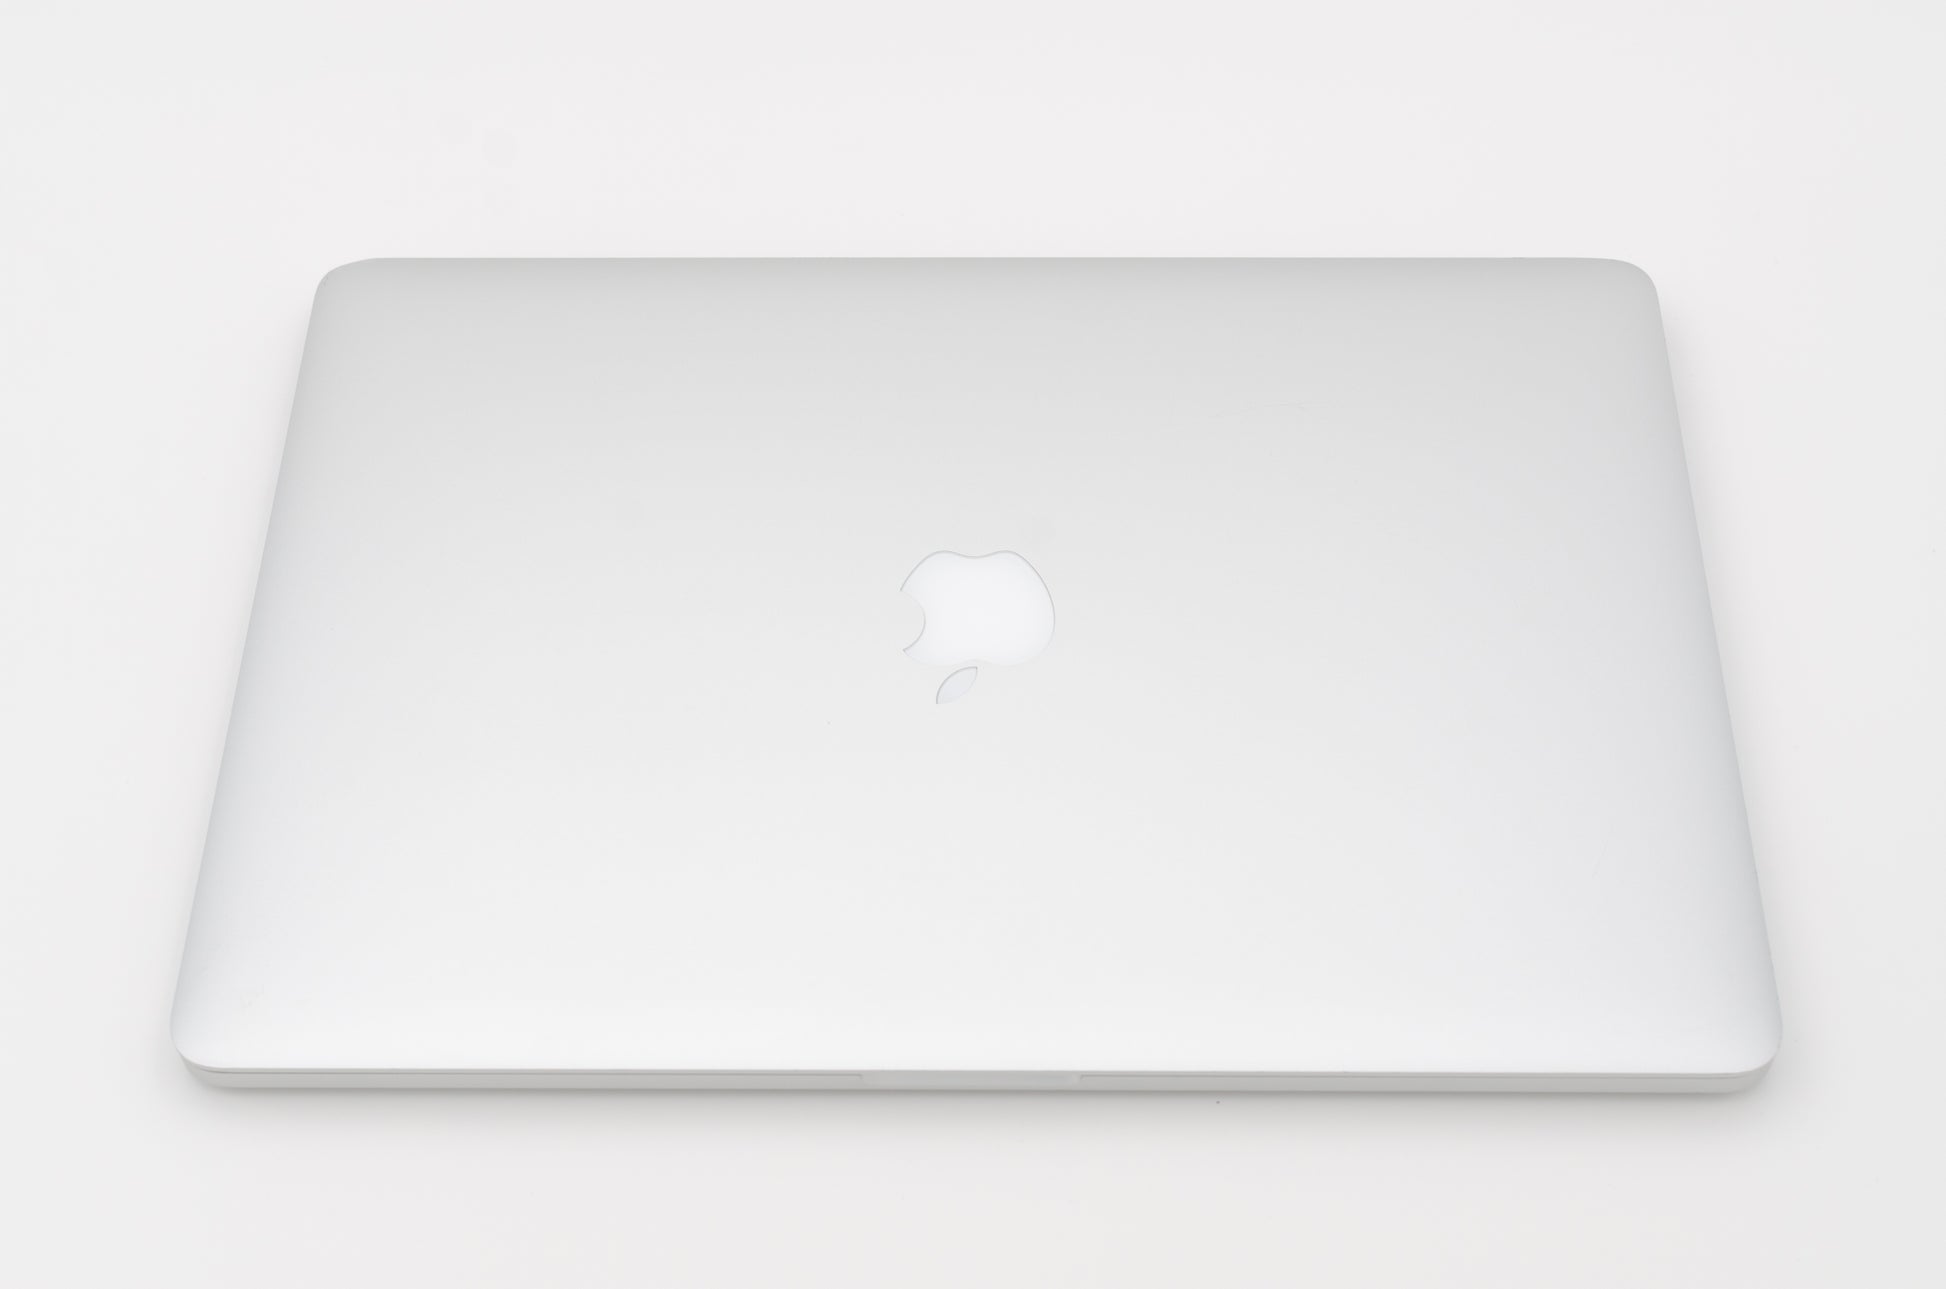 apple-early-2011-15.4-inch-macbook-pro-a1286-aluminum-qci7 - 2ghz processor, 4gb ram, hd 6490m - 256mb gpu-mc721ll/a-3